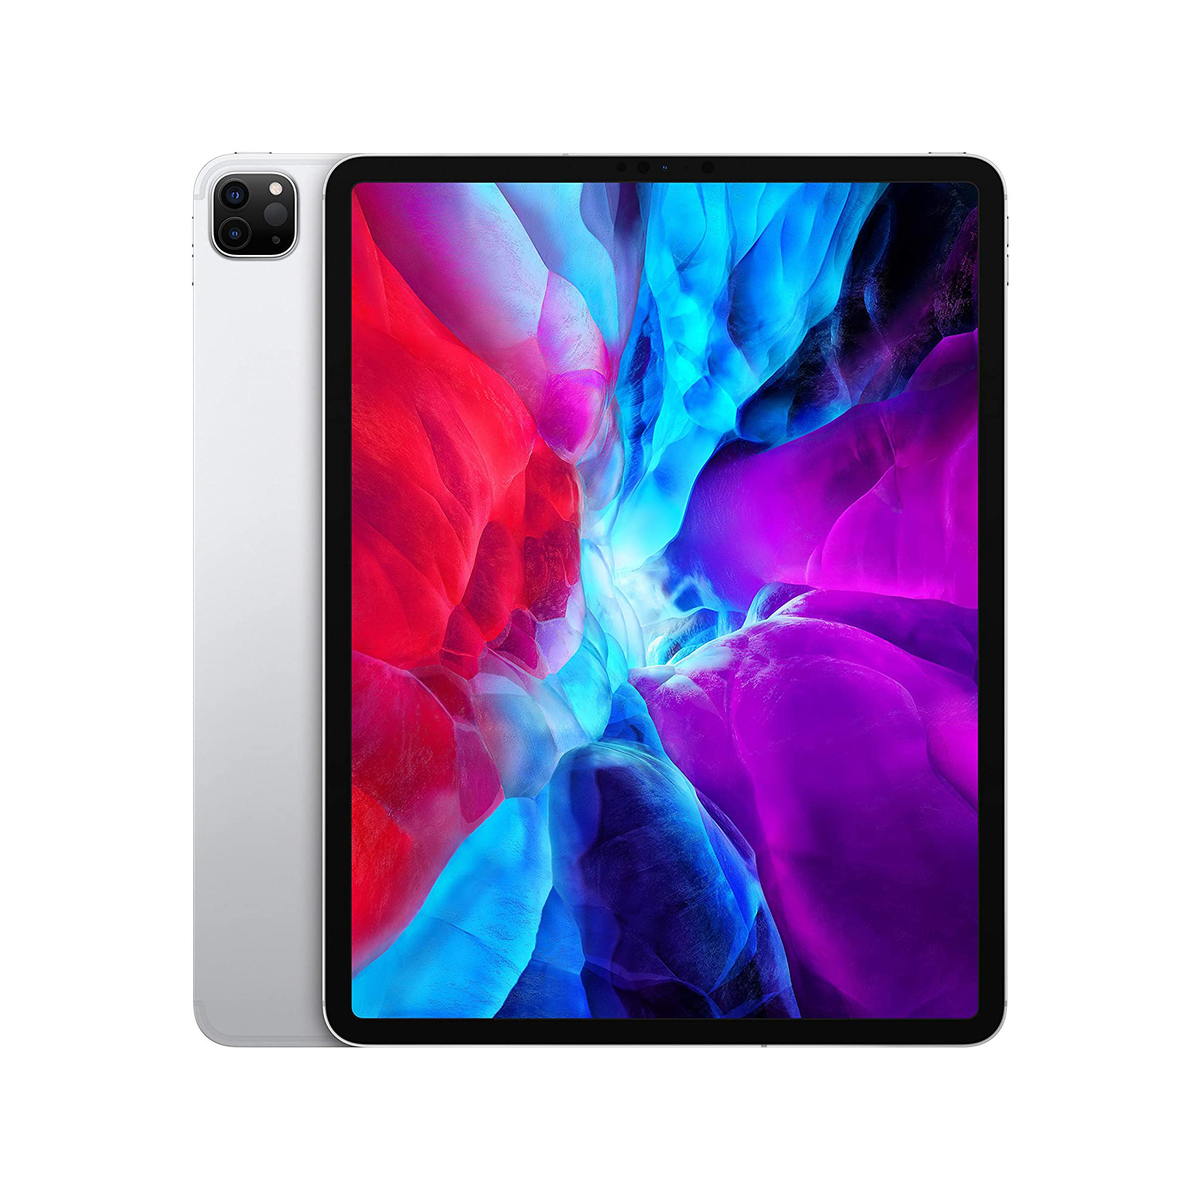 Apple iPad Pro (12.9-inch, Wi-Fi + Cellular, 512GB) - Silver (4th Generation)